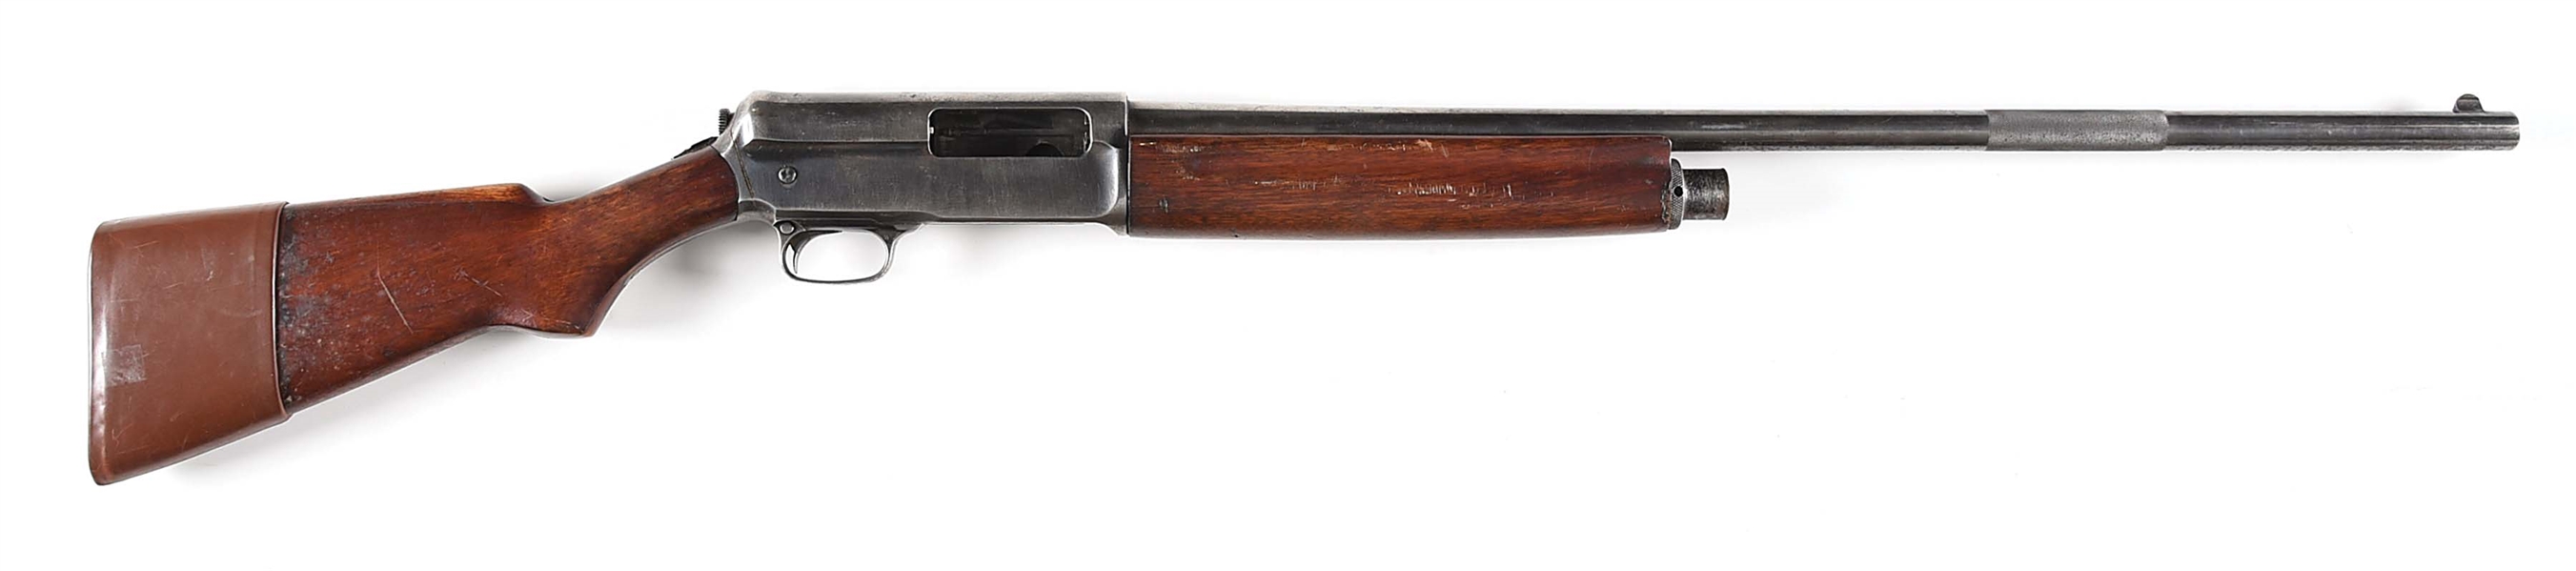 (C) WINCHESTER 1911 "WIDOWMAKER" SEMI-AUTOMATIC SHOTGUN.